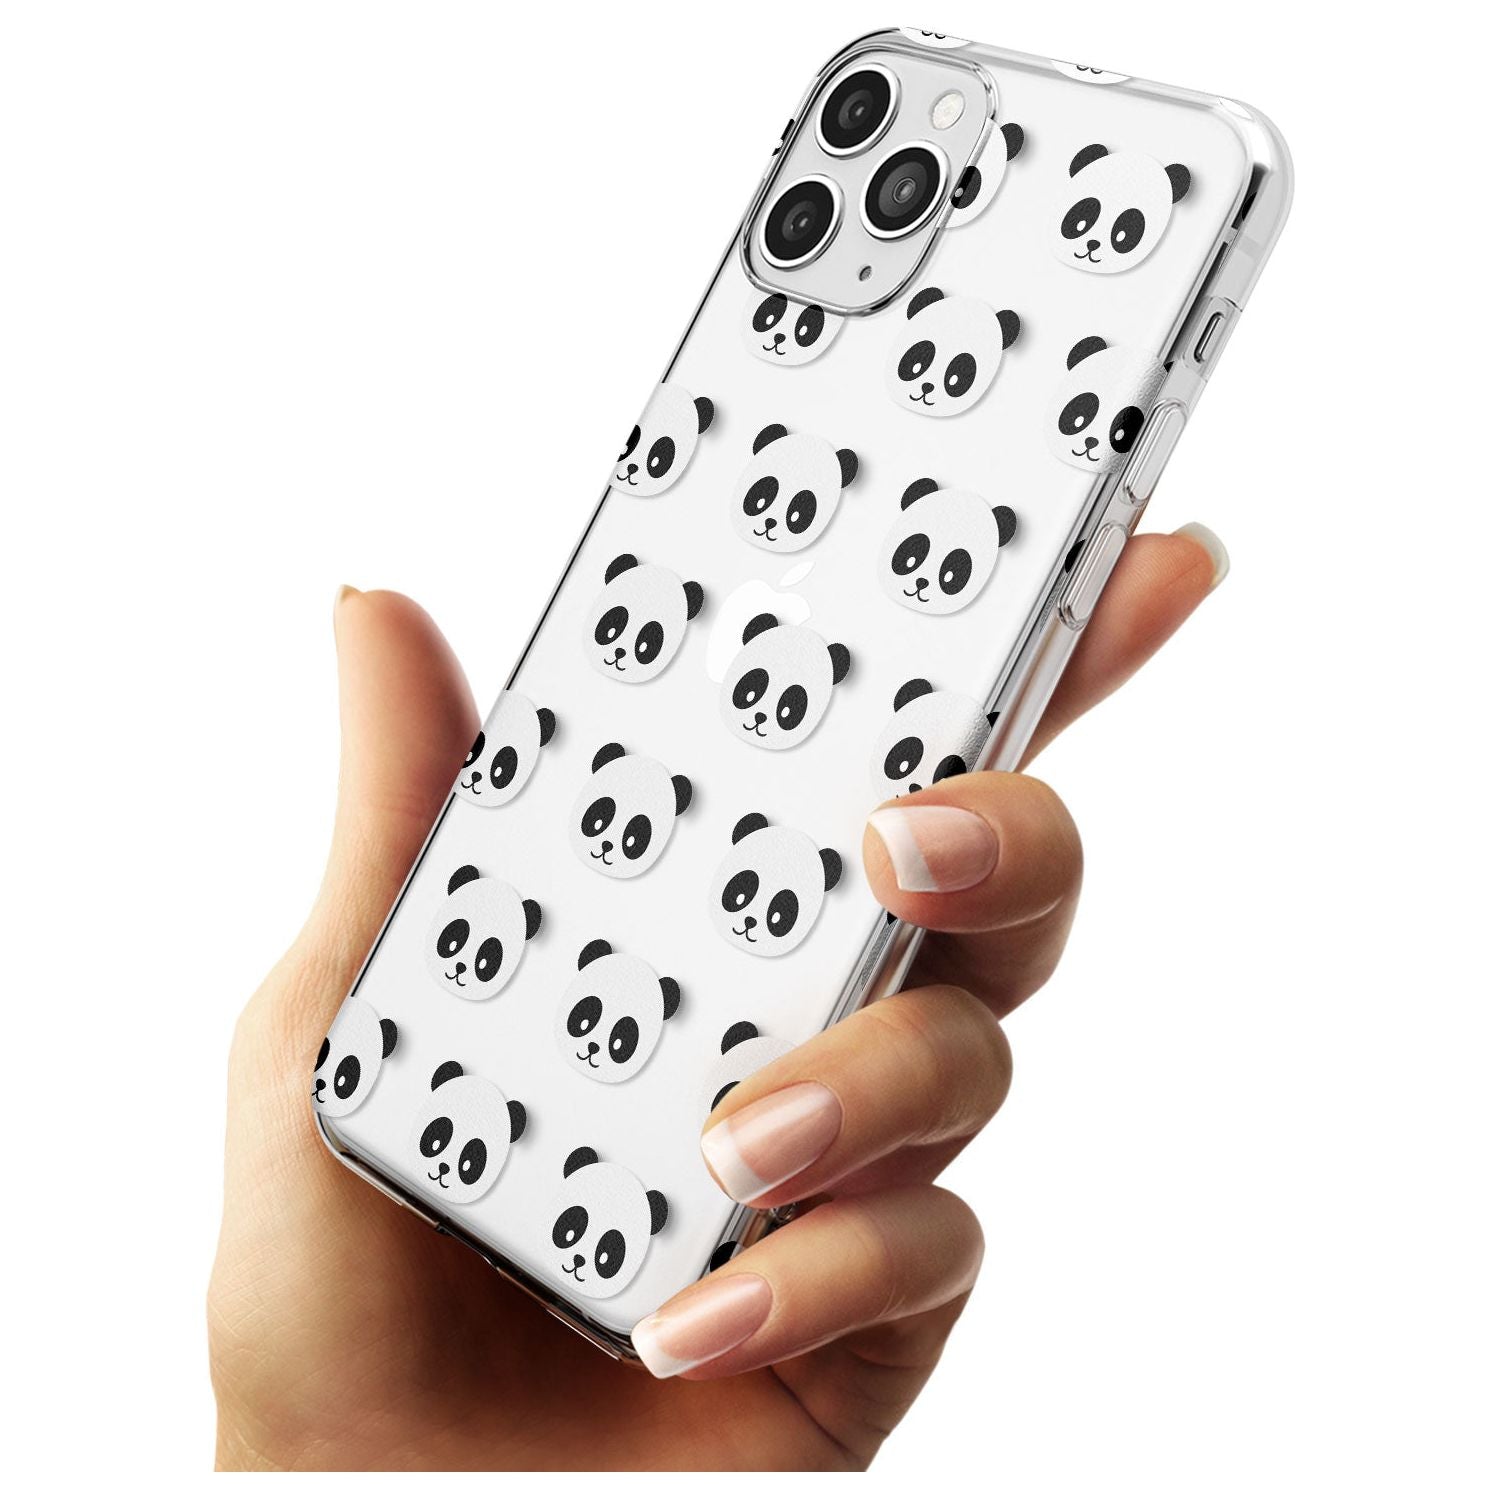 Panda Face Pattern Black Impact Phone Case for iPhone 11 Pro Max